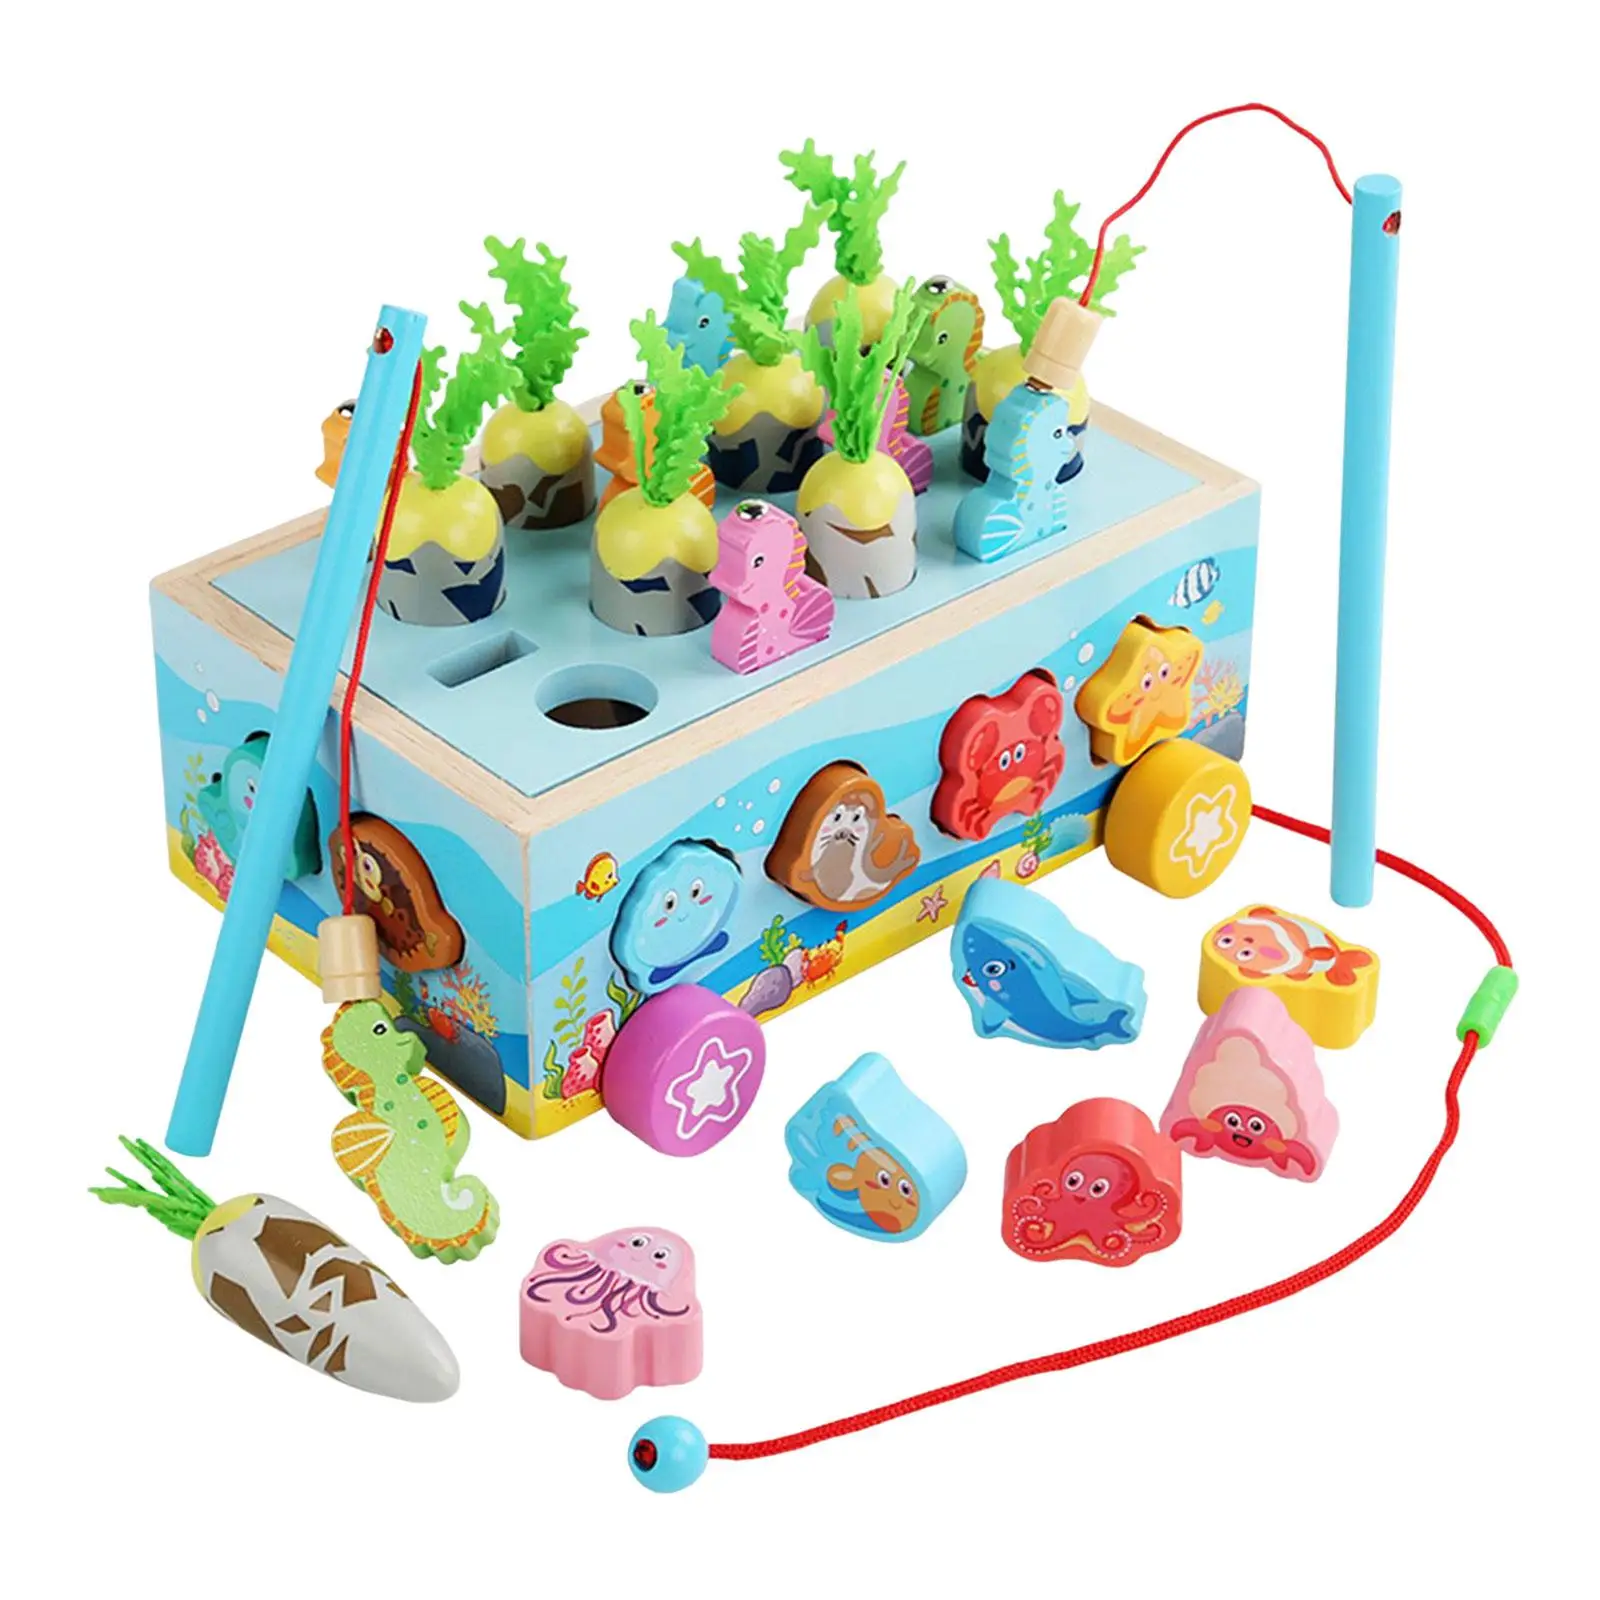 Montessori Wooden Shape Sorter Toys Educational Toys Fine Motor Skills Fishing Game Car with Animal Blocks for Girls Boys Gift